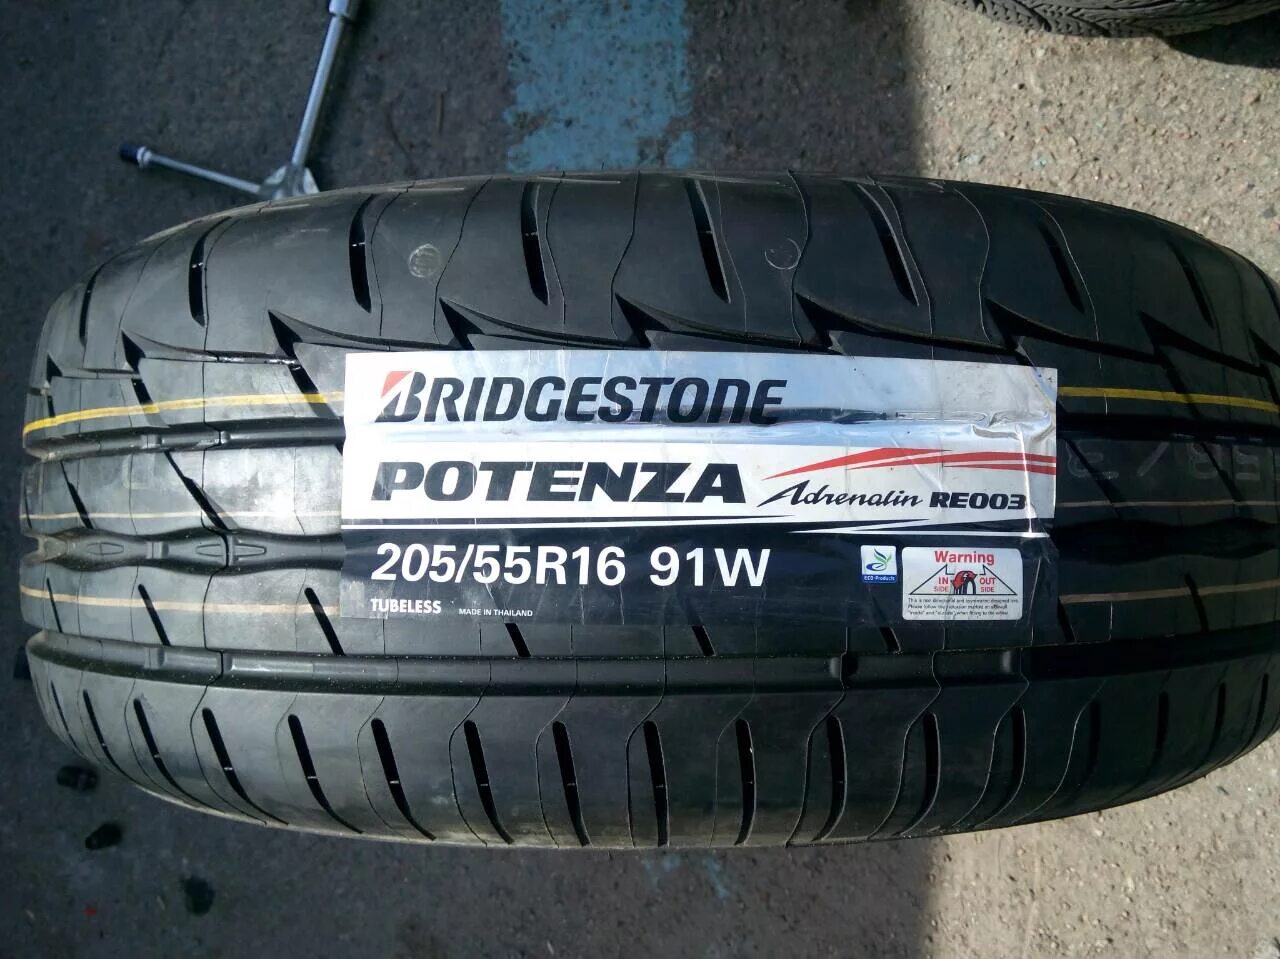 Bridgestone 205/55r16 91w potenza Adrenalin re004. Бриджстоун potenza Adrenalin re003. Bridgestone potenza Adrenalin re004 205/55 r16. Bridgestone 205/55r16 91w potenza Adrenalin re003.